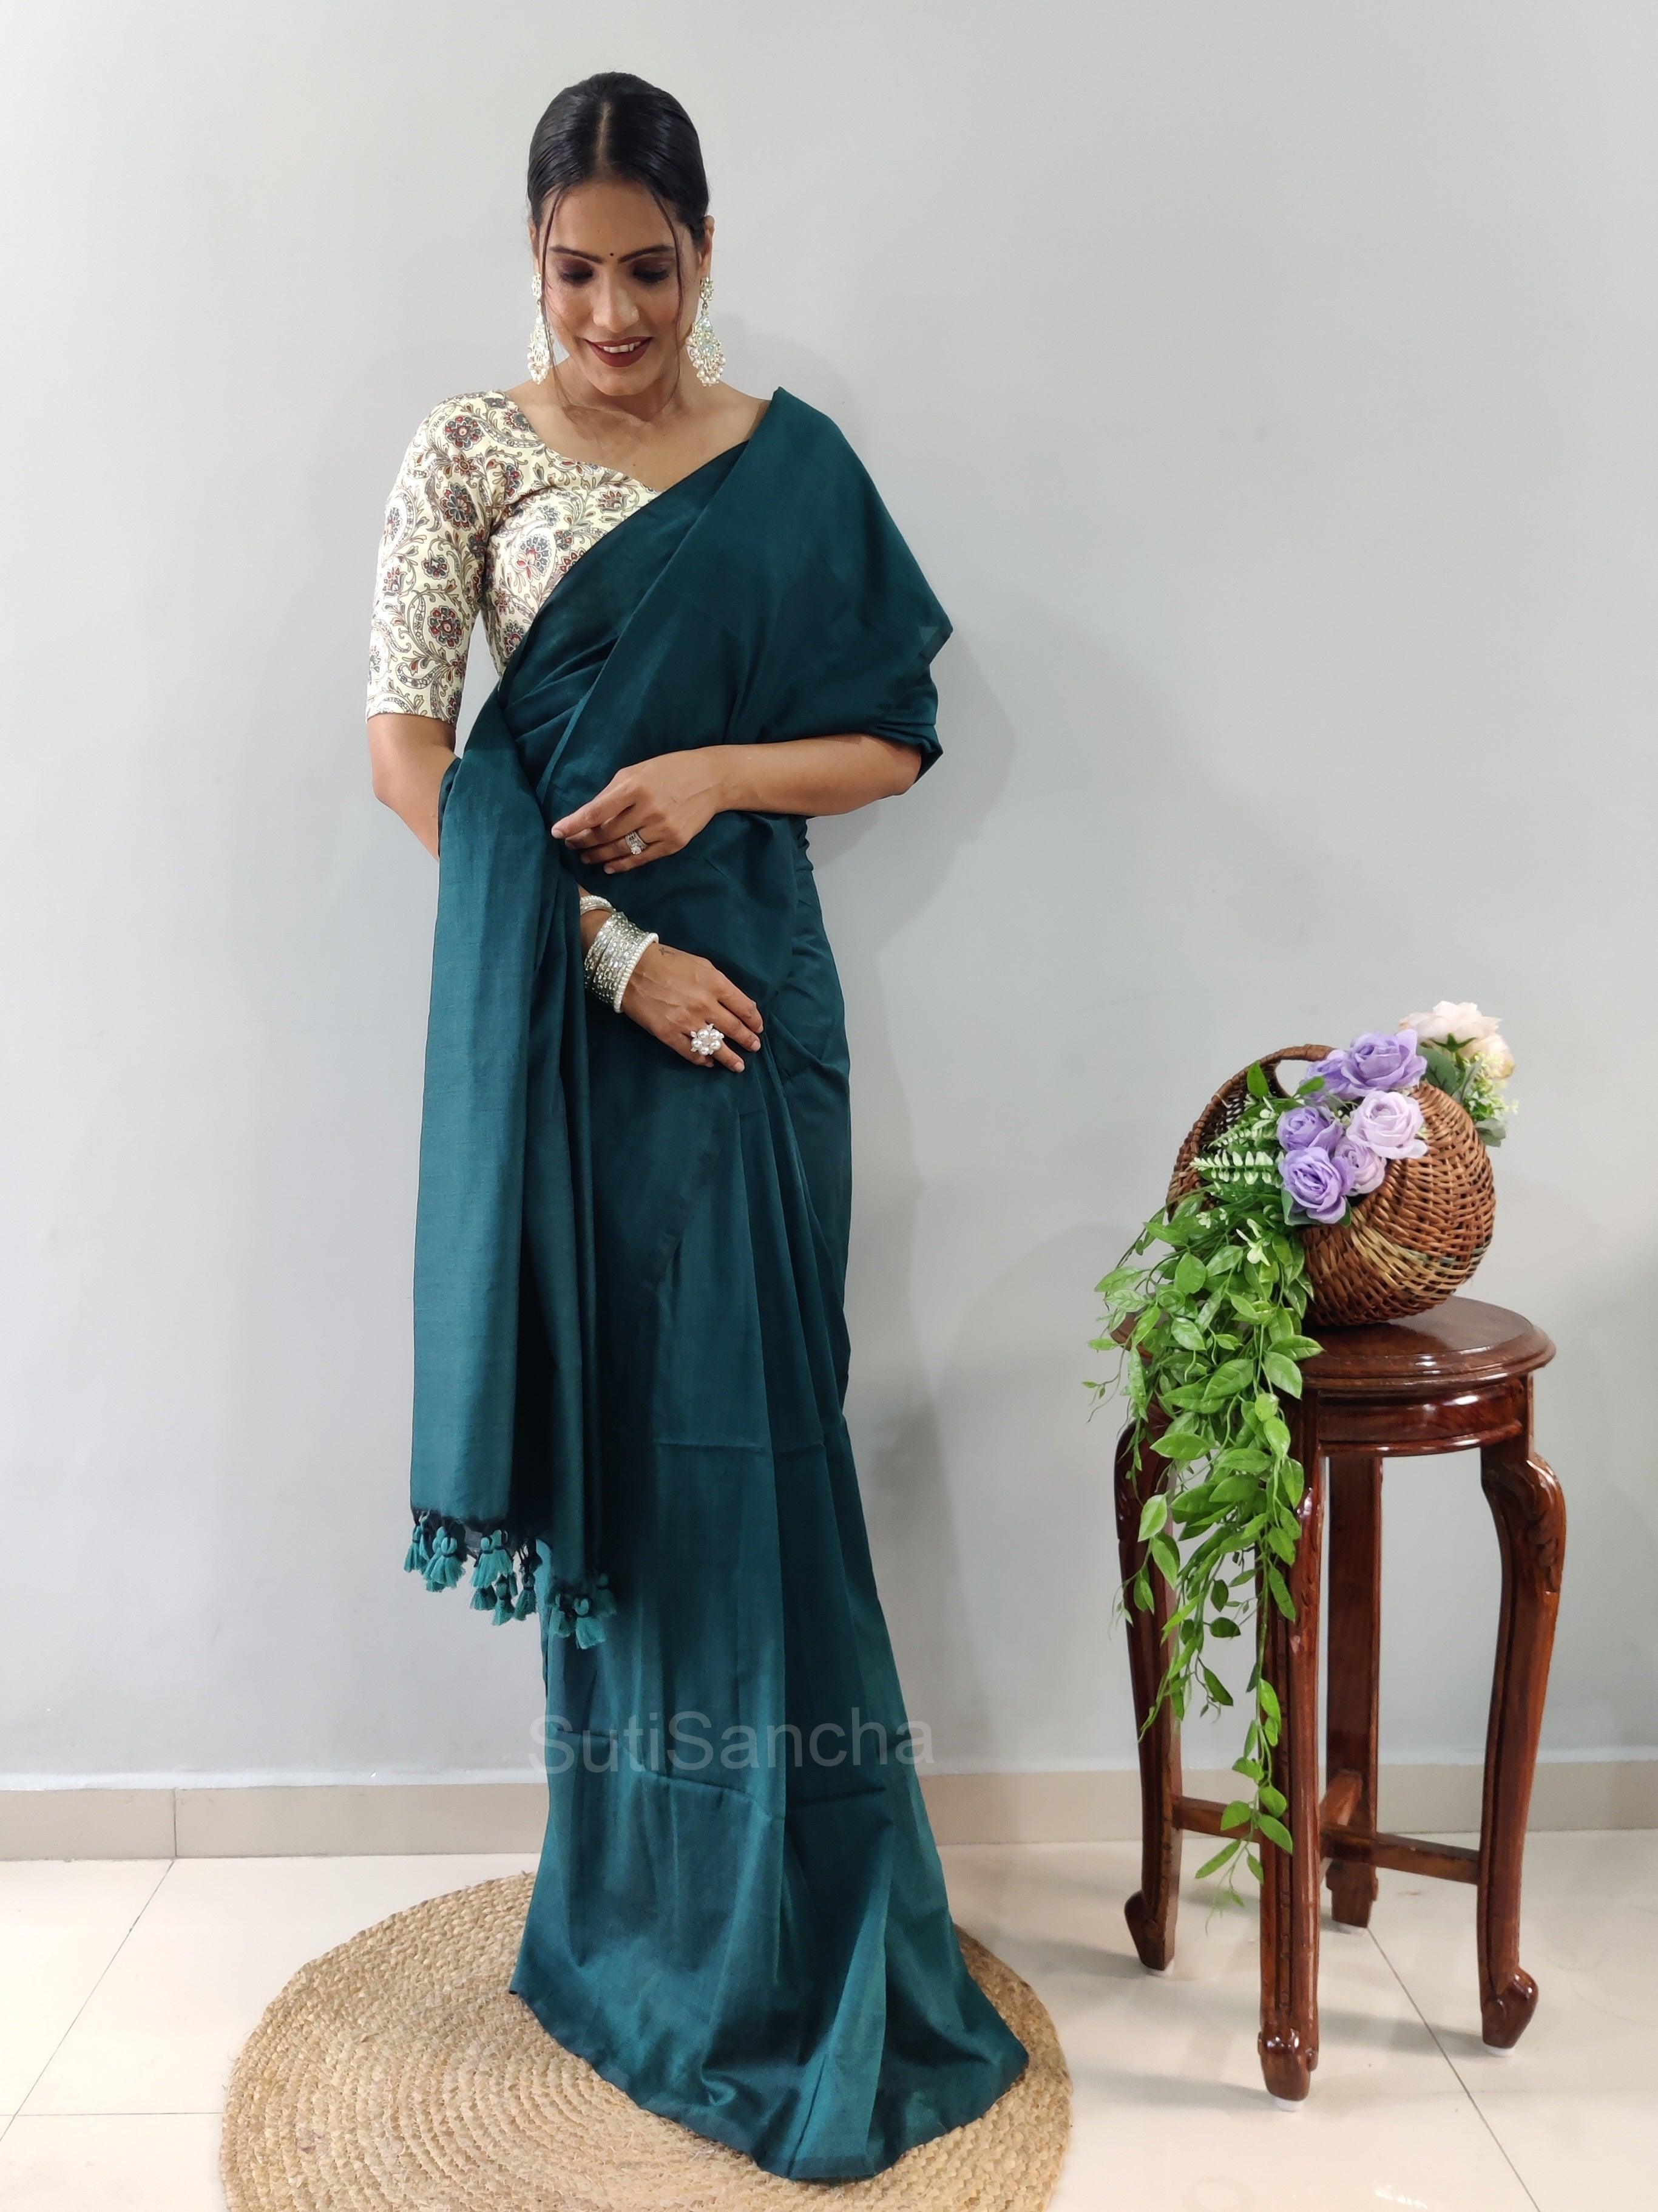 Sutisancha Rama Khadi Saree & designer Blouse - Suti Sancha